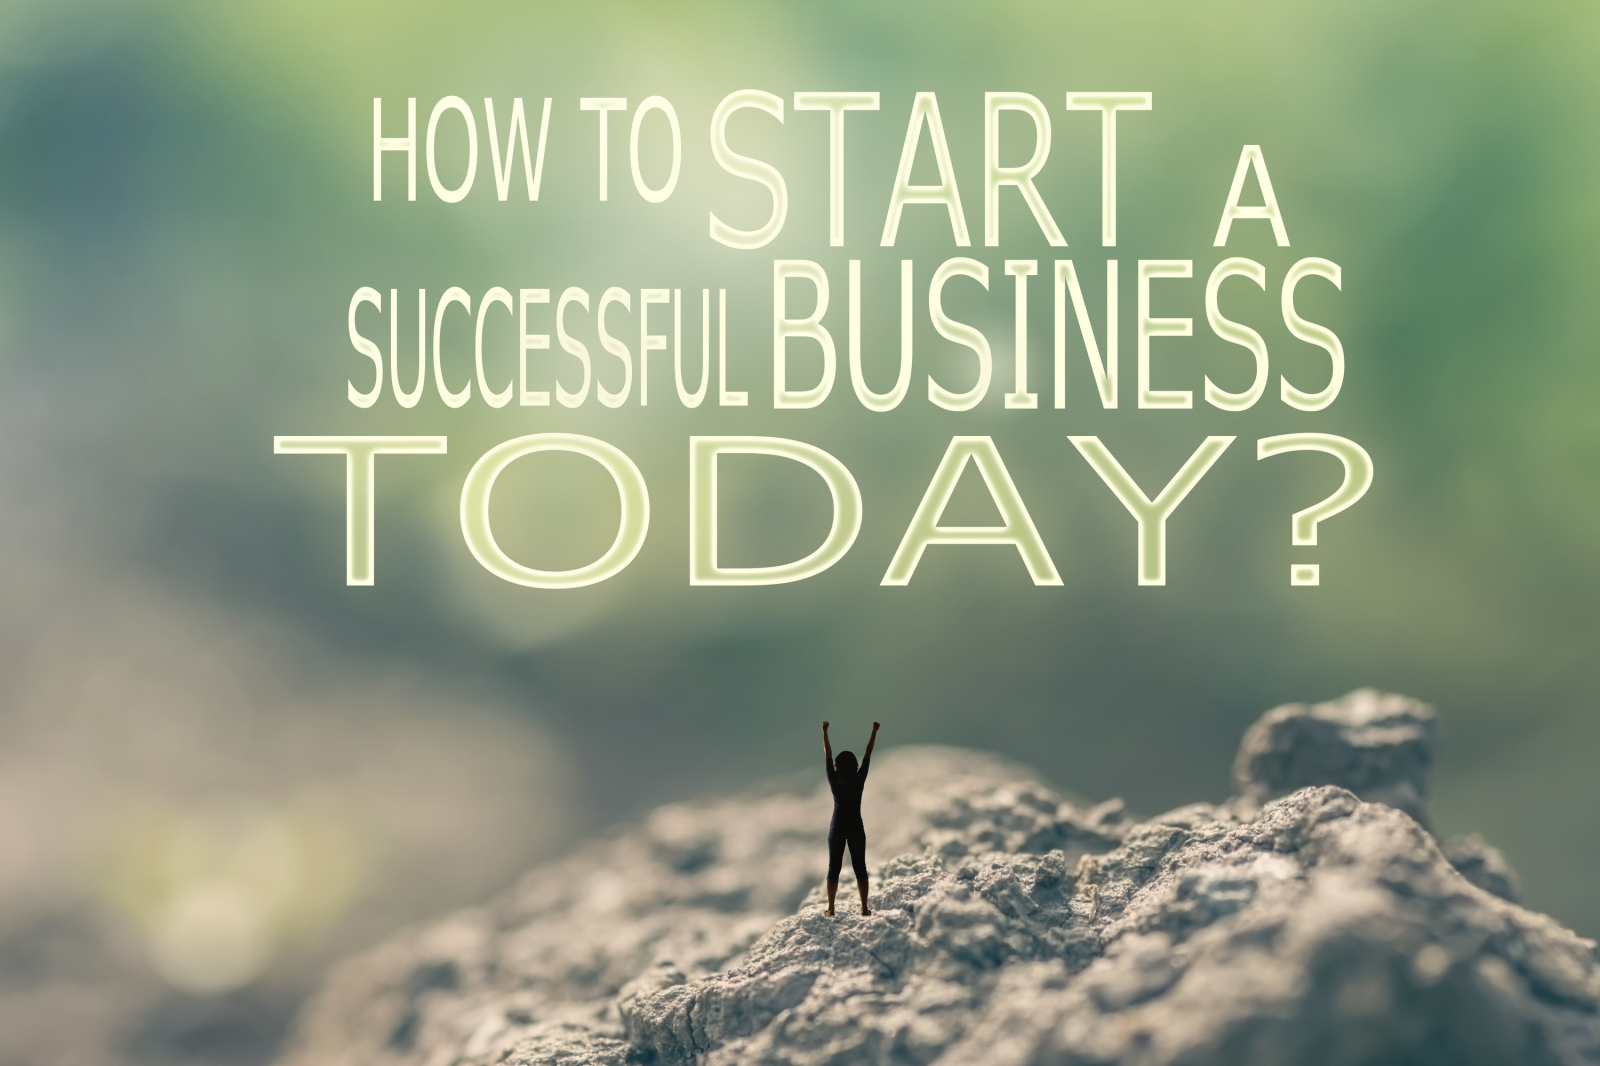 Start a Small Business Ideas | Business Plans